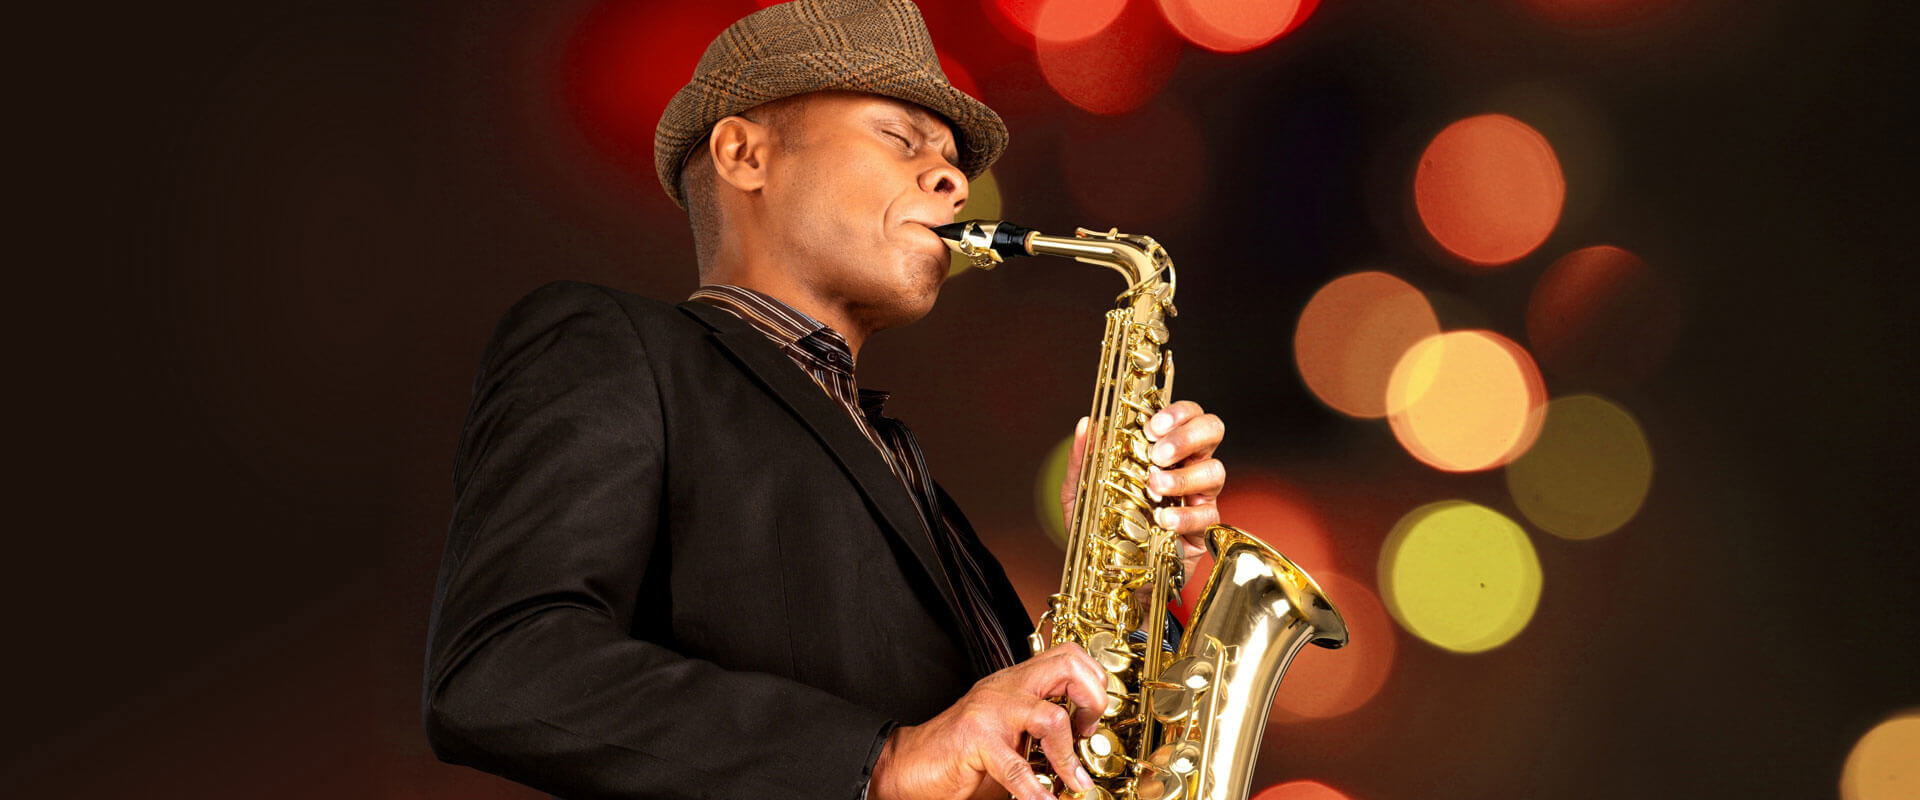 Saxophone Lessons Nesconset, NY